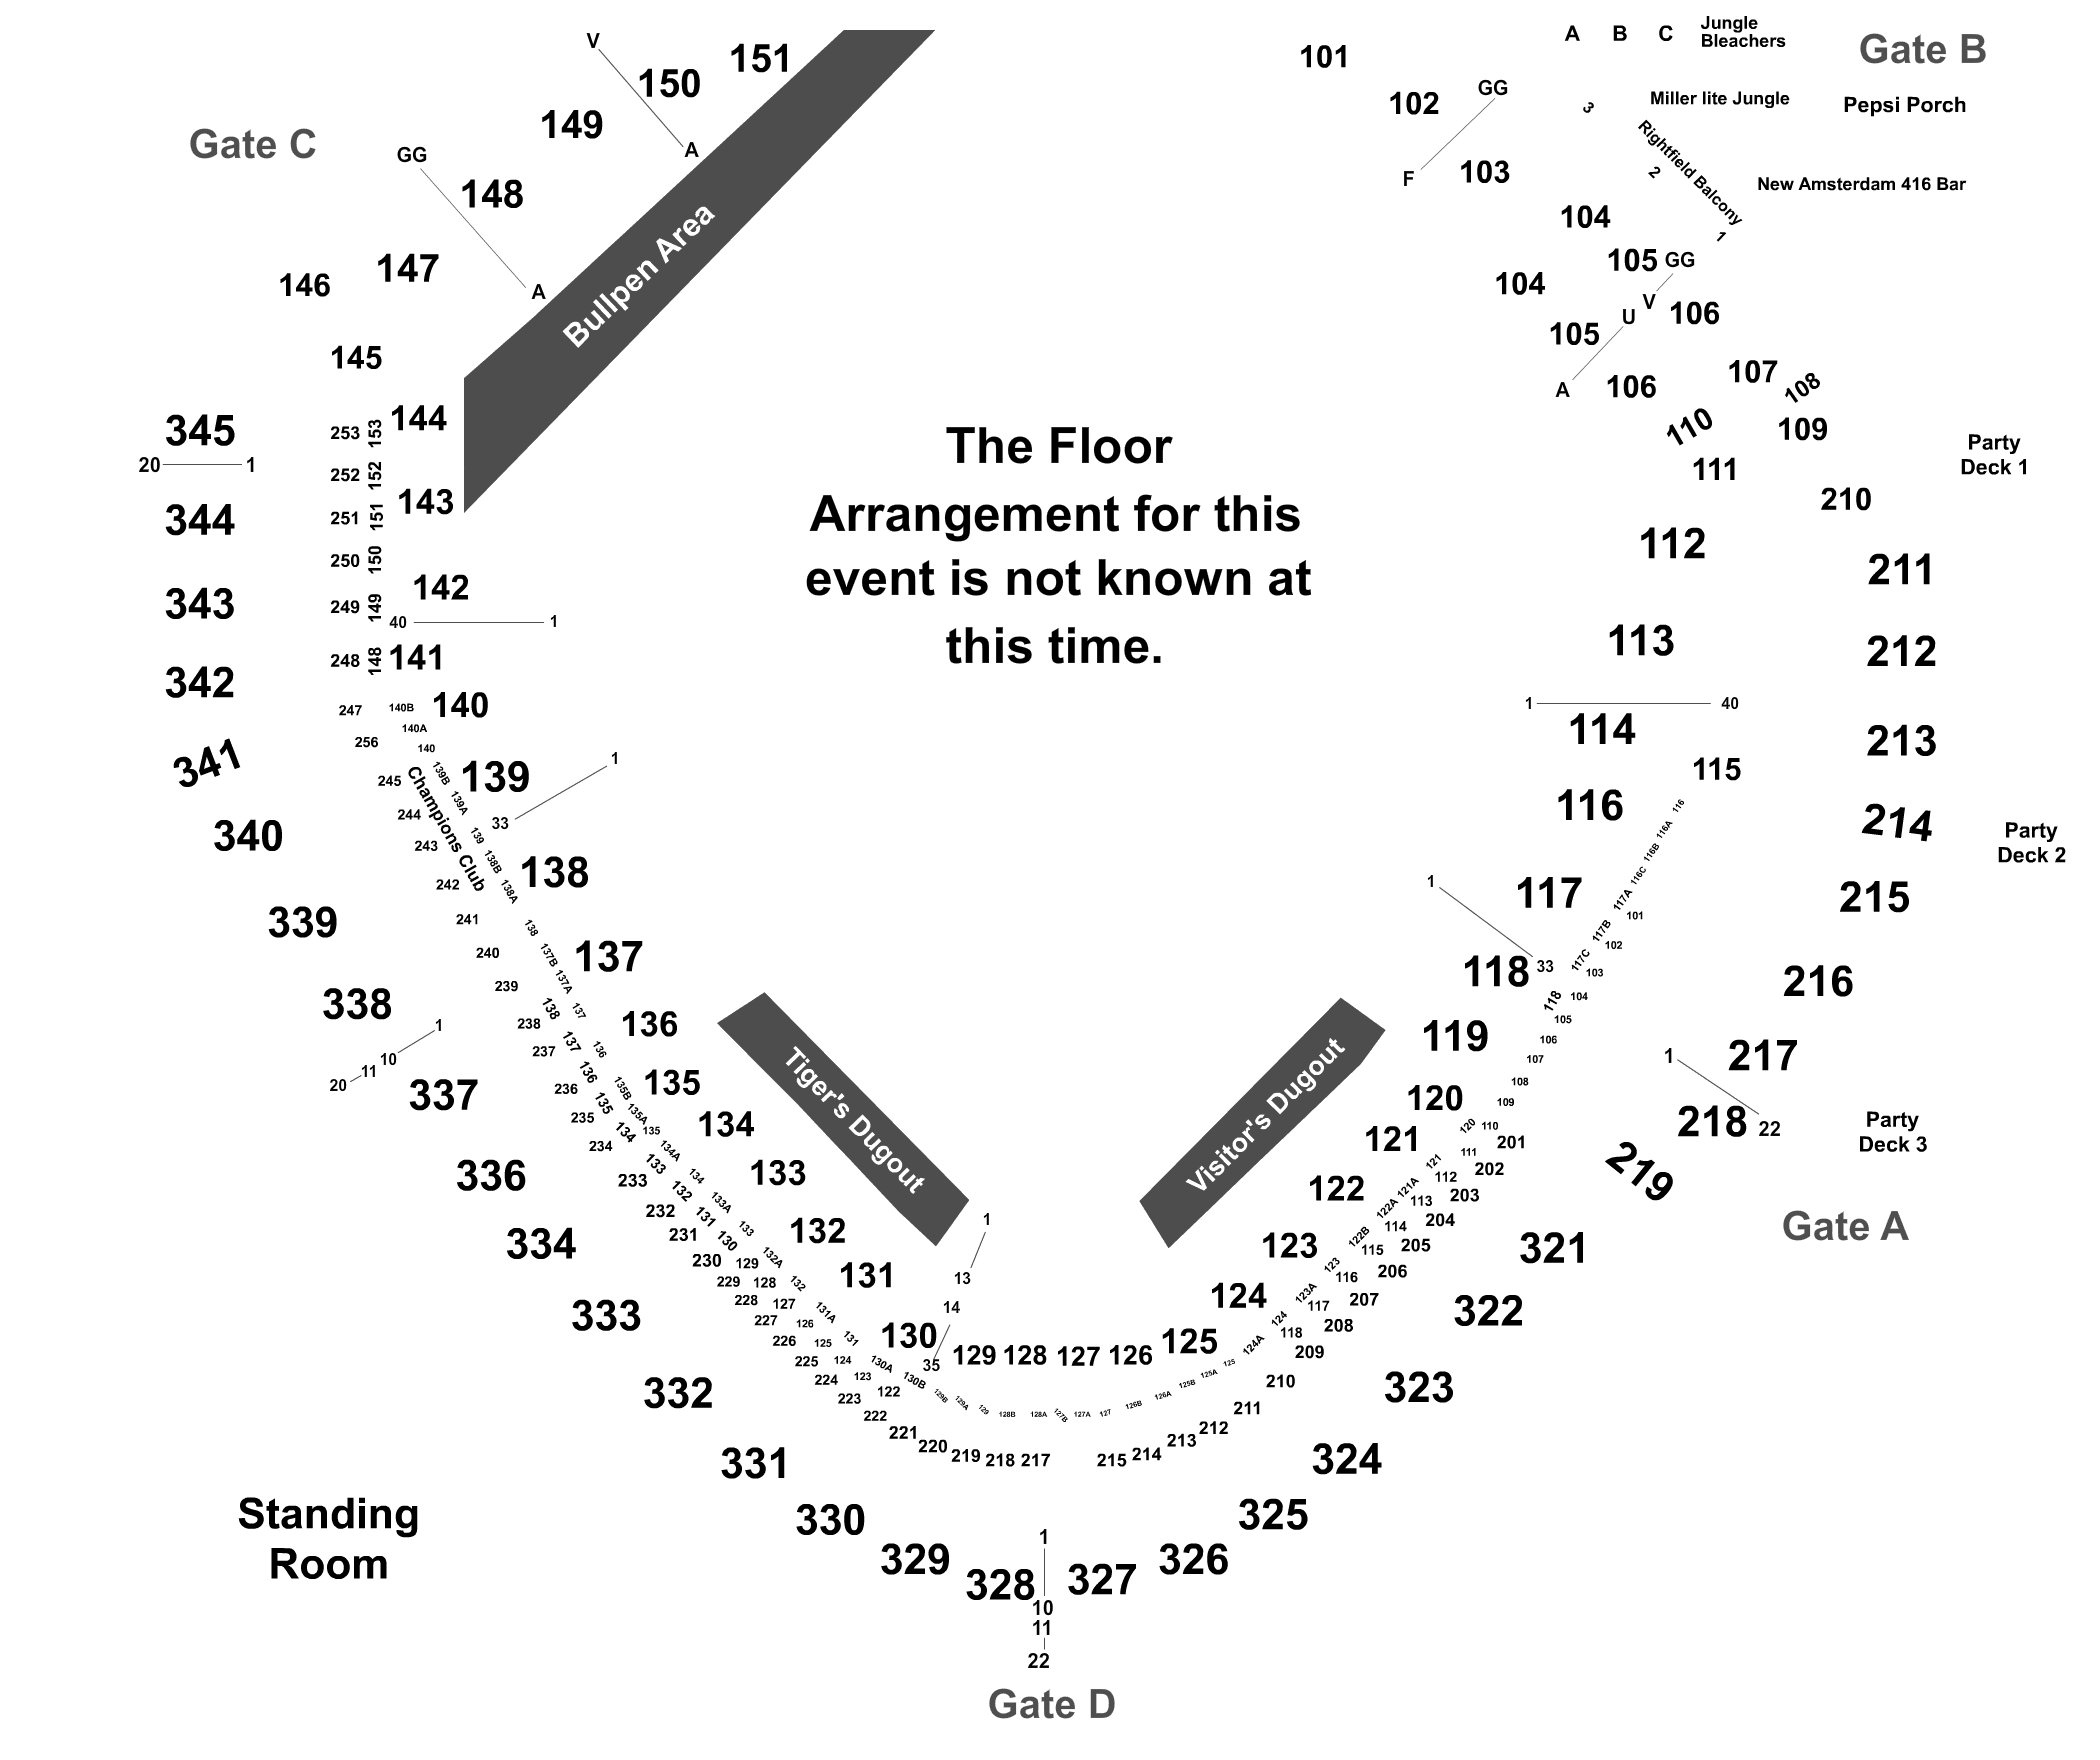 Comerica Park Stadium Seating Chart